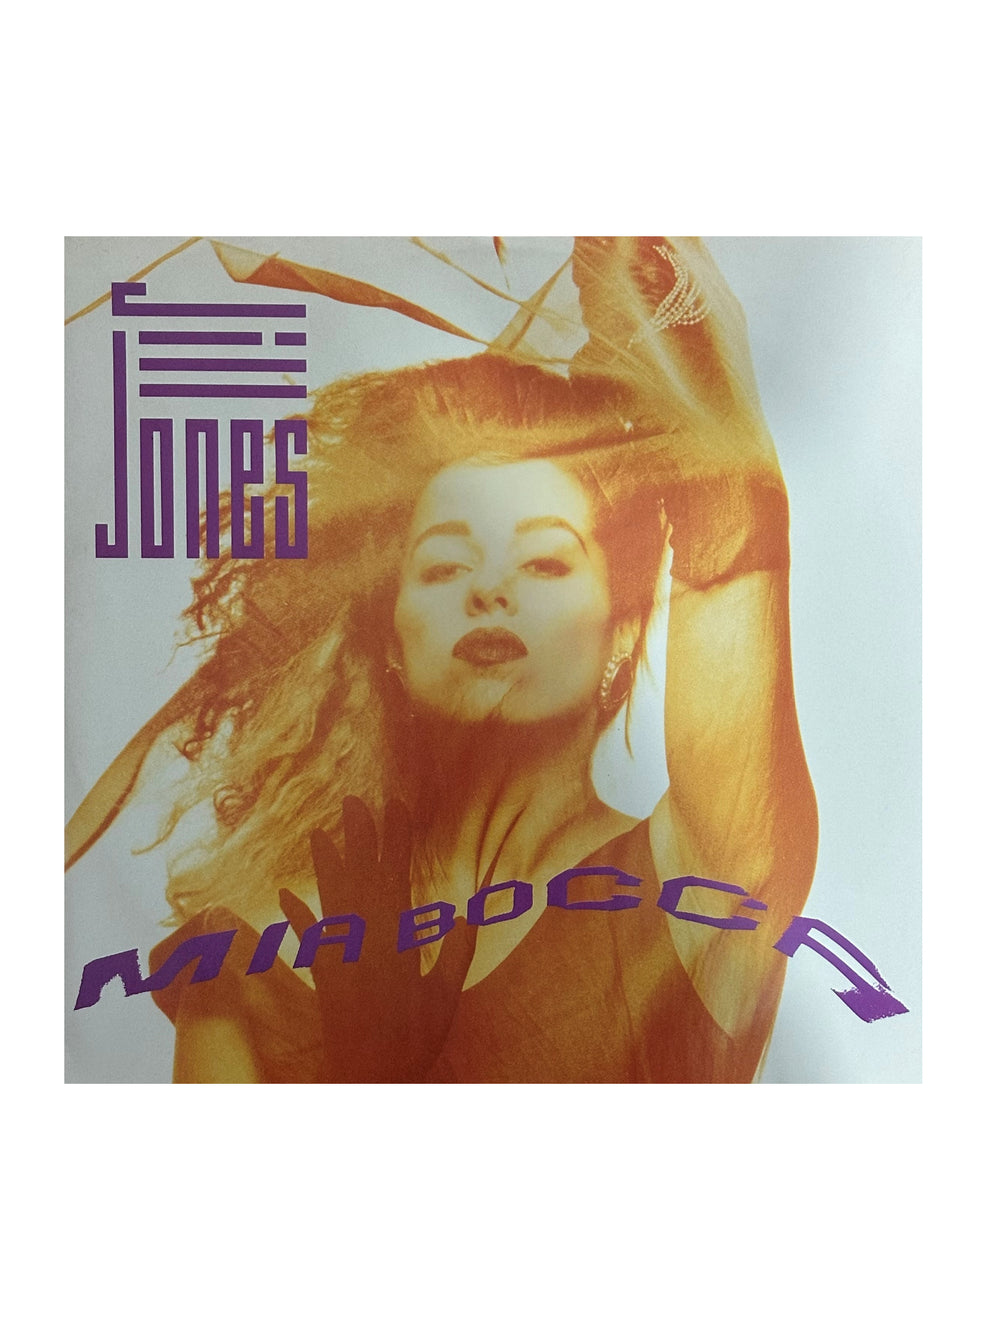 Prince - Jill Jones Mia Bocca Extended Vinyl 12 UK Play Tested Preloved: 1987